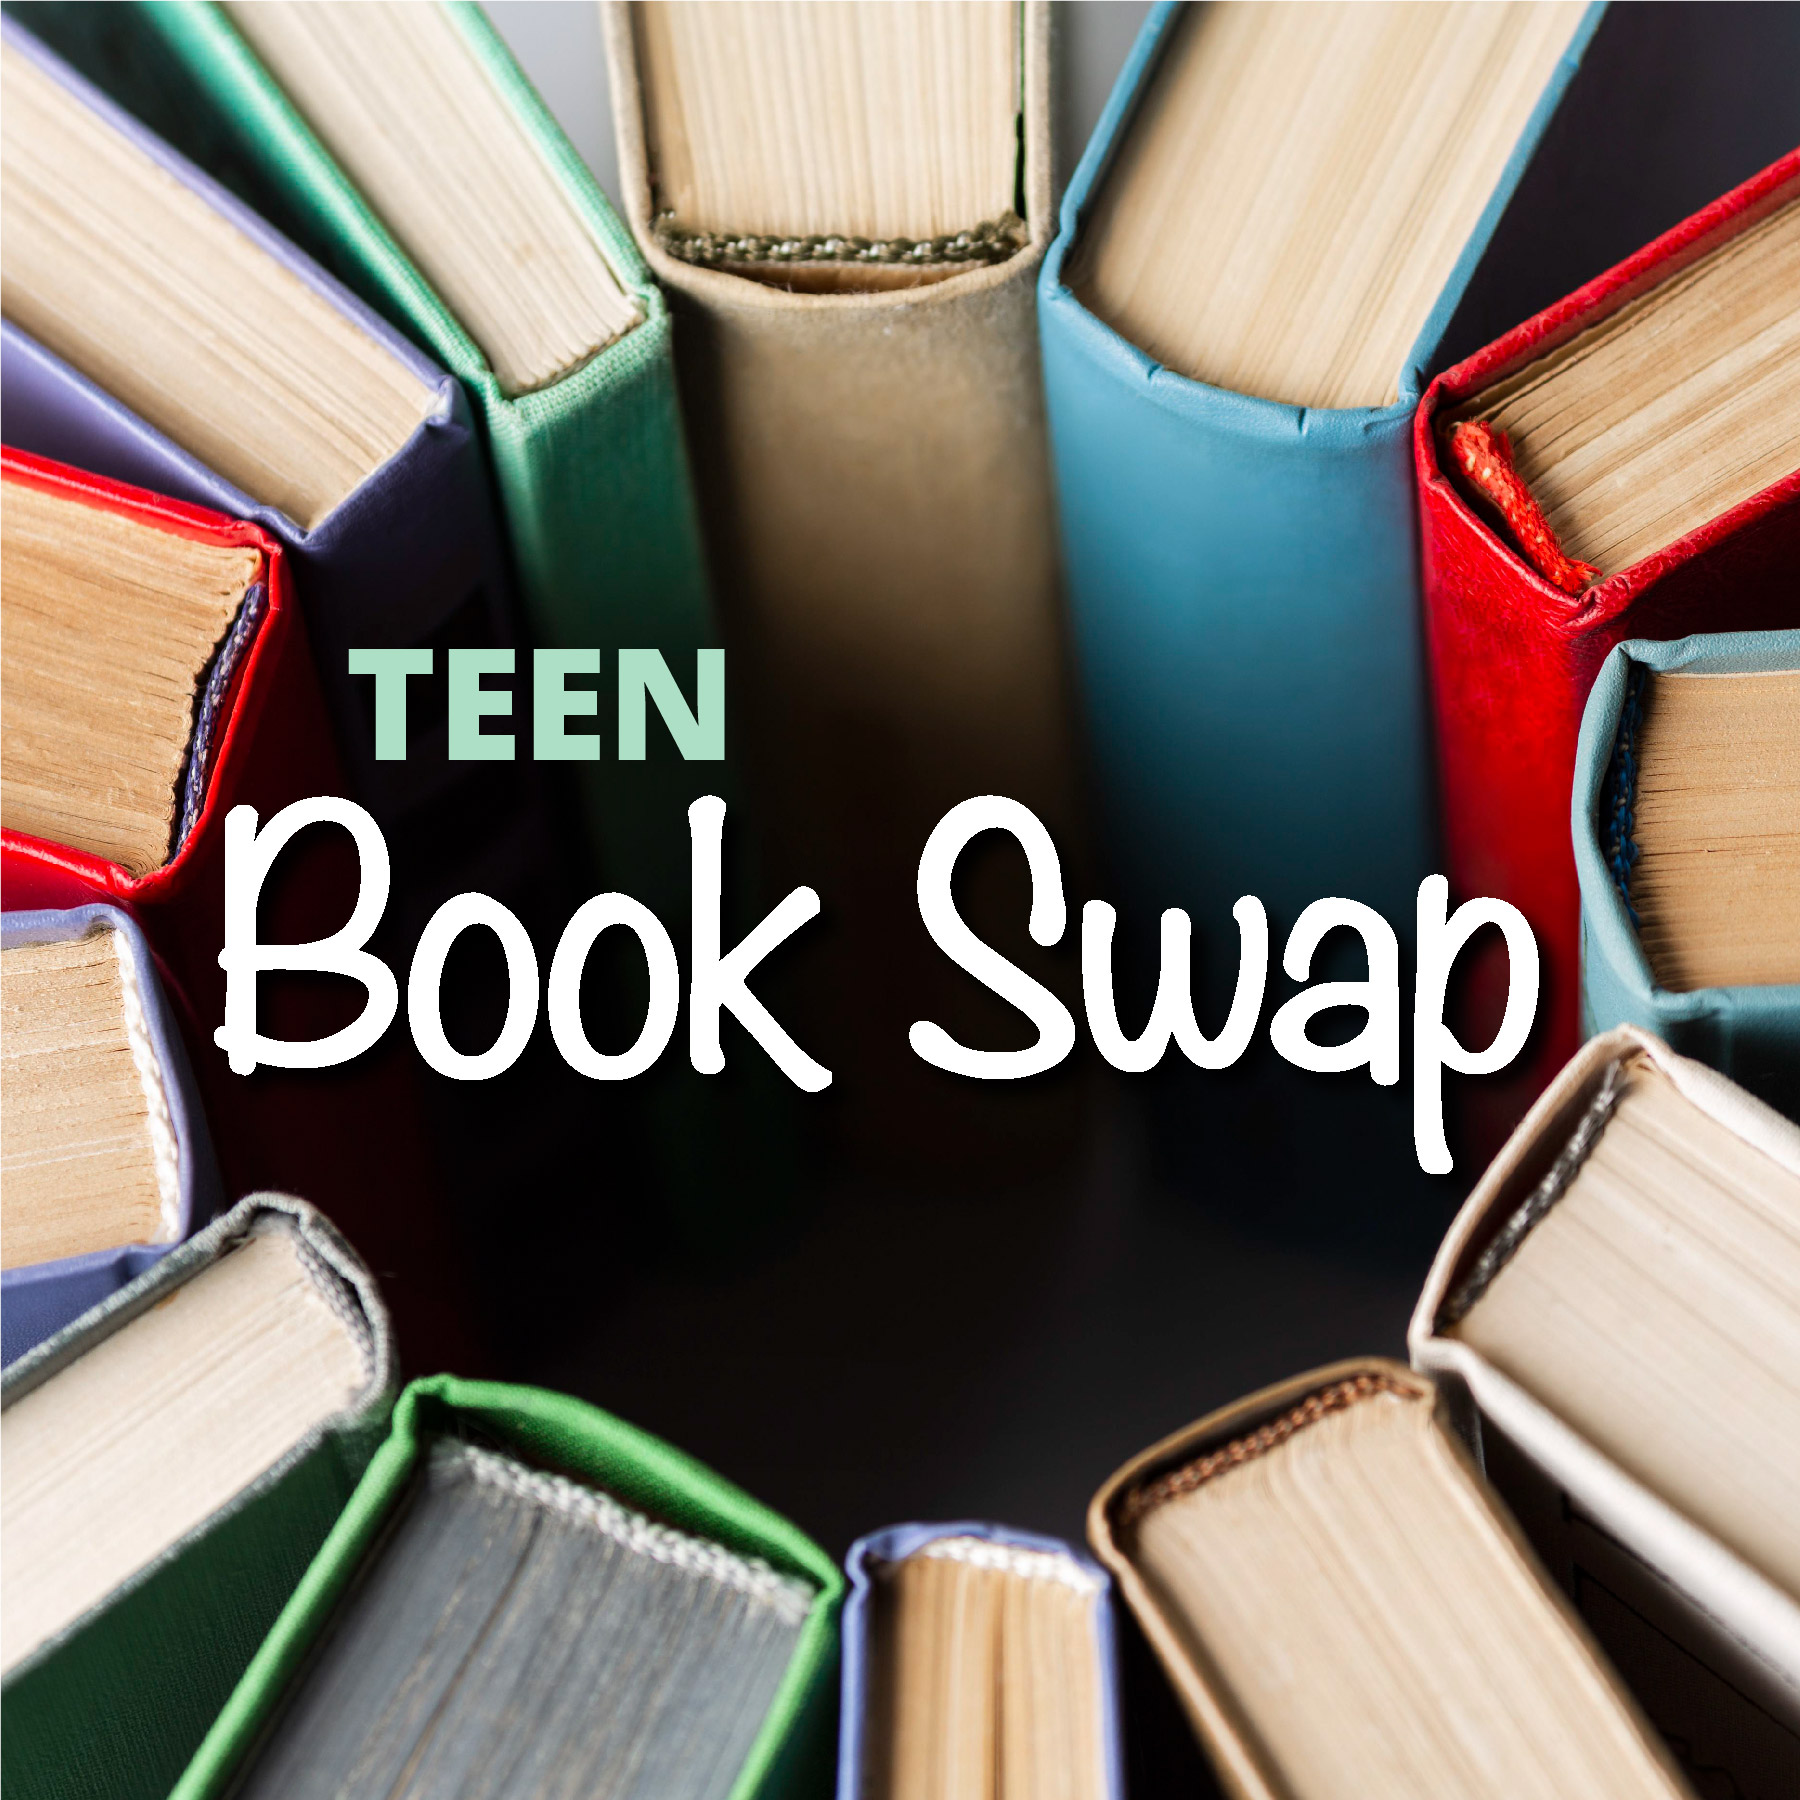 Books surrounding "Teen Book Swap" text